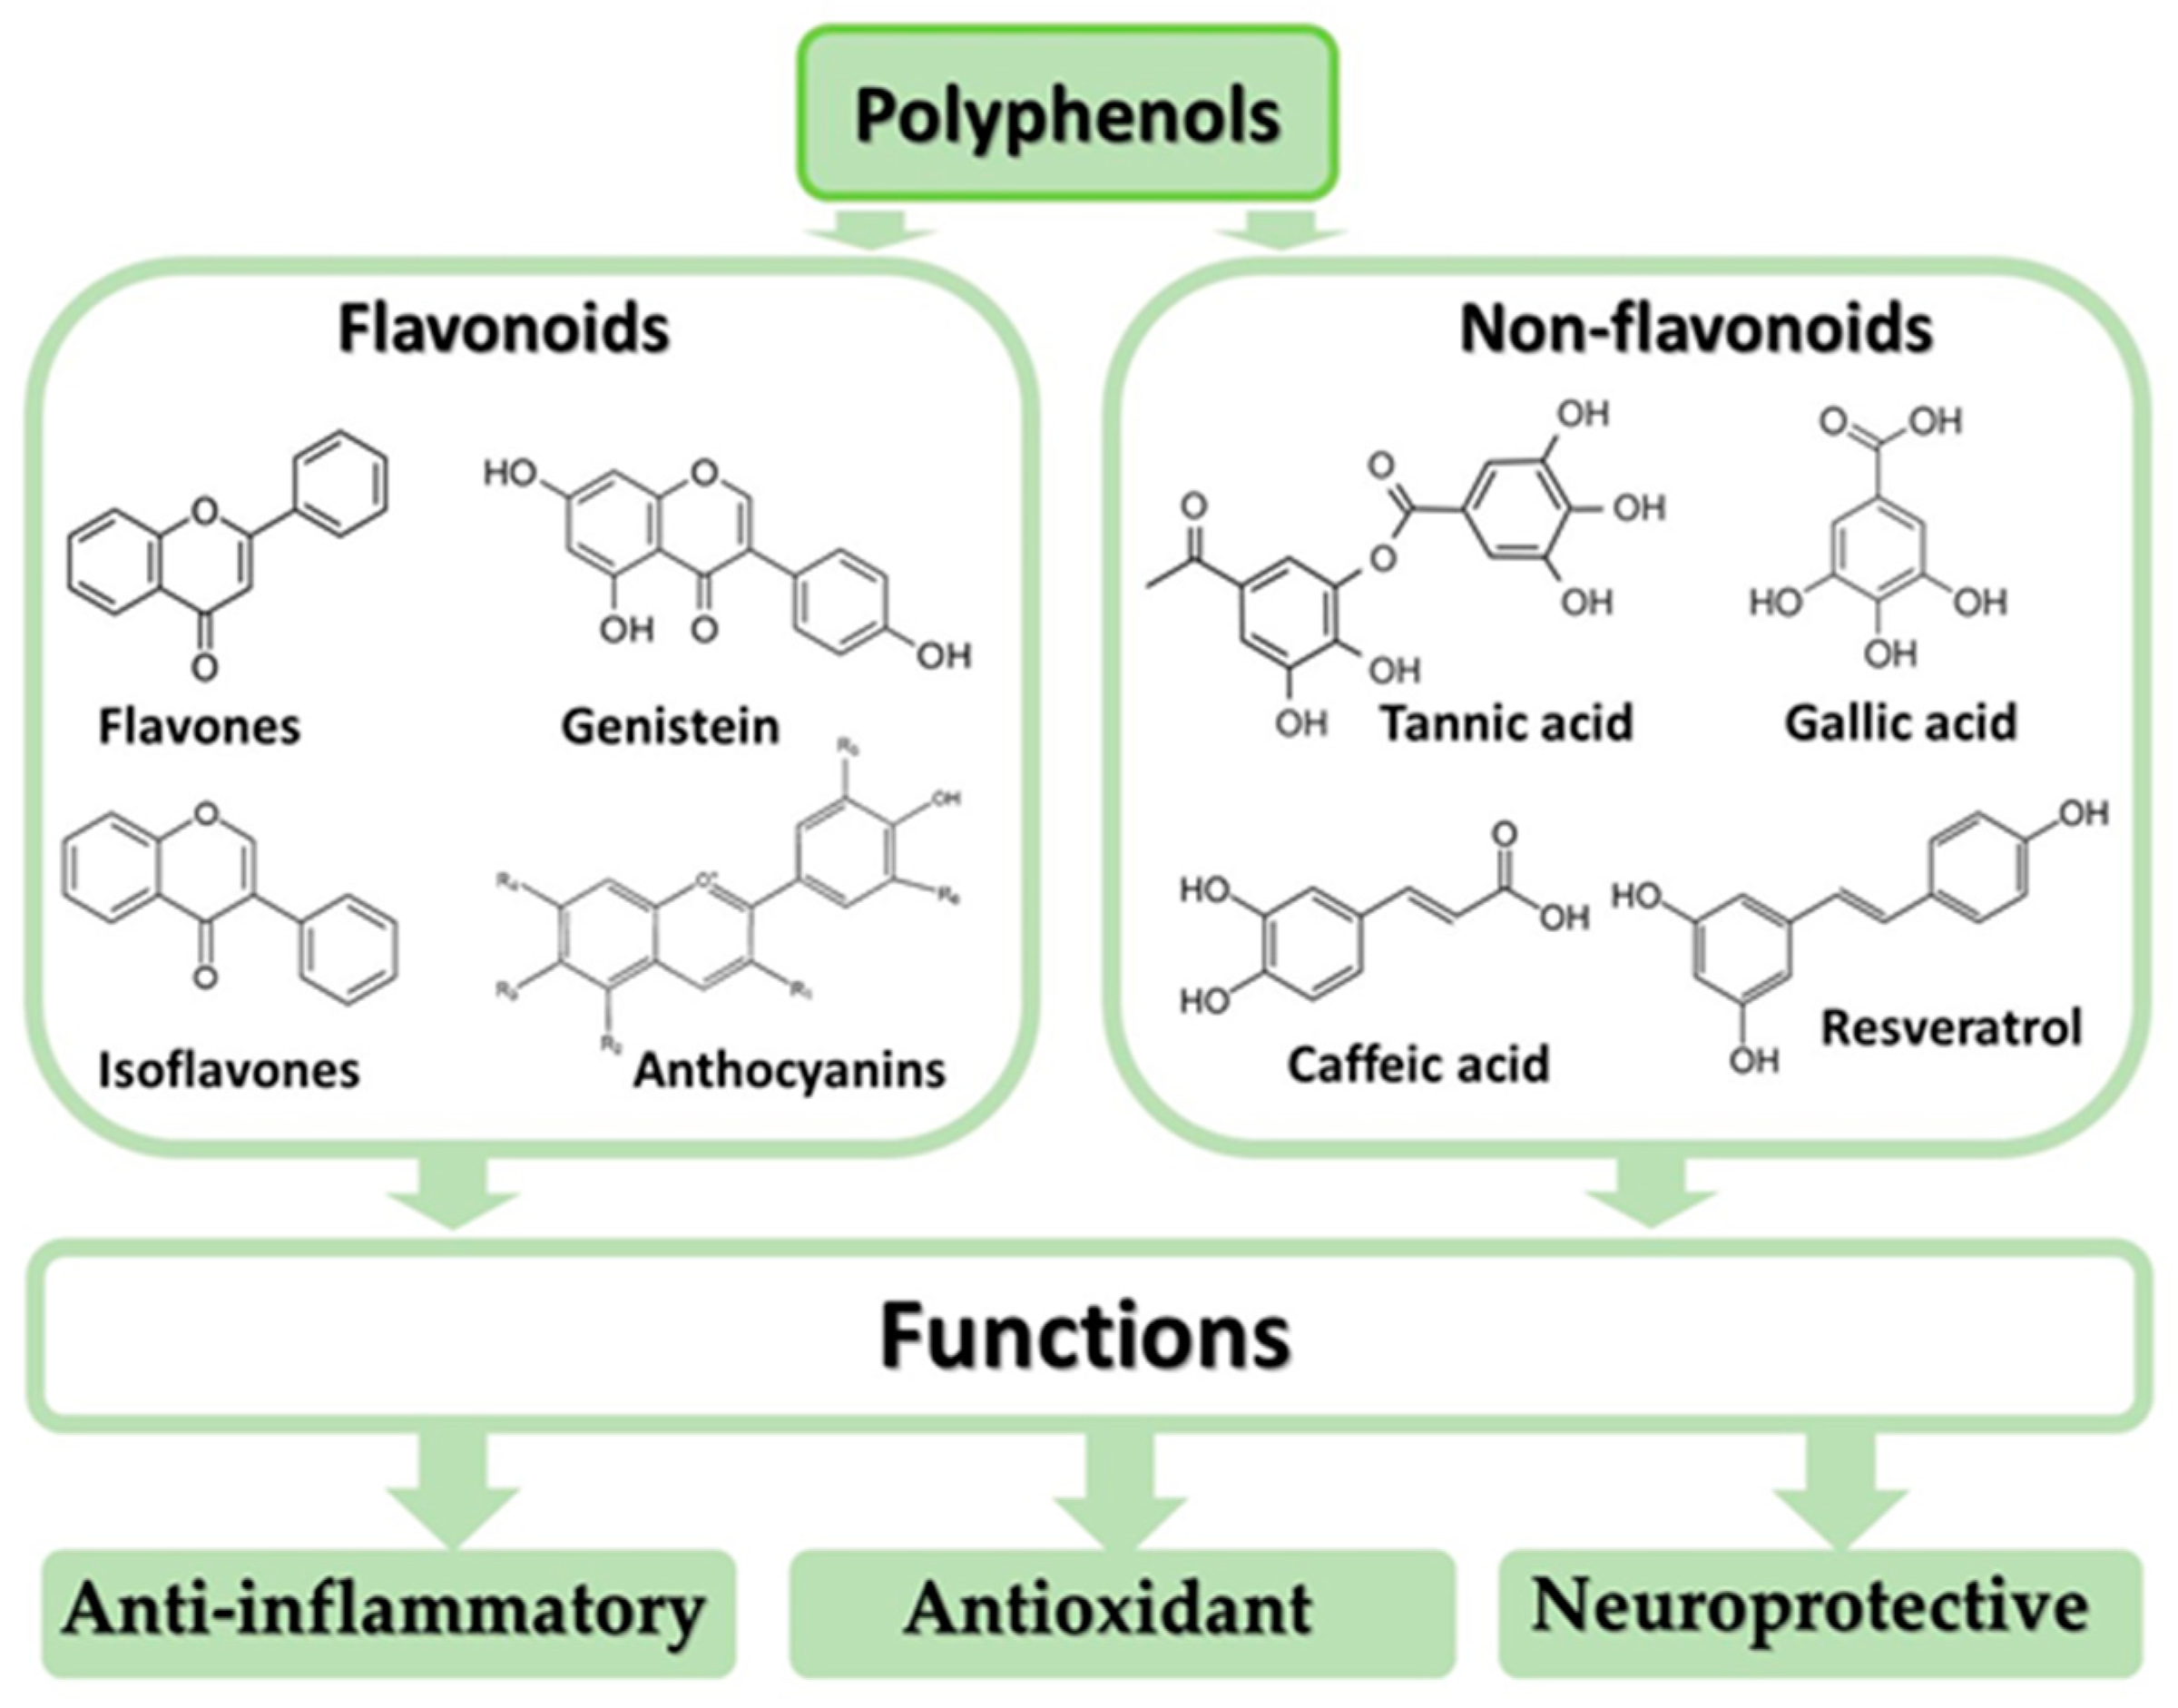 Polyphenols and anti-inflammatory effects